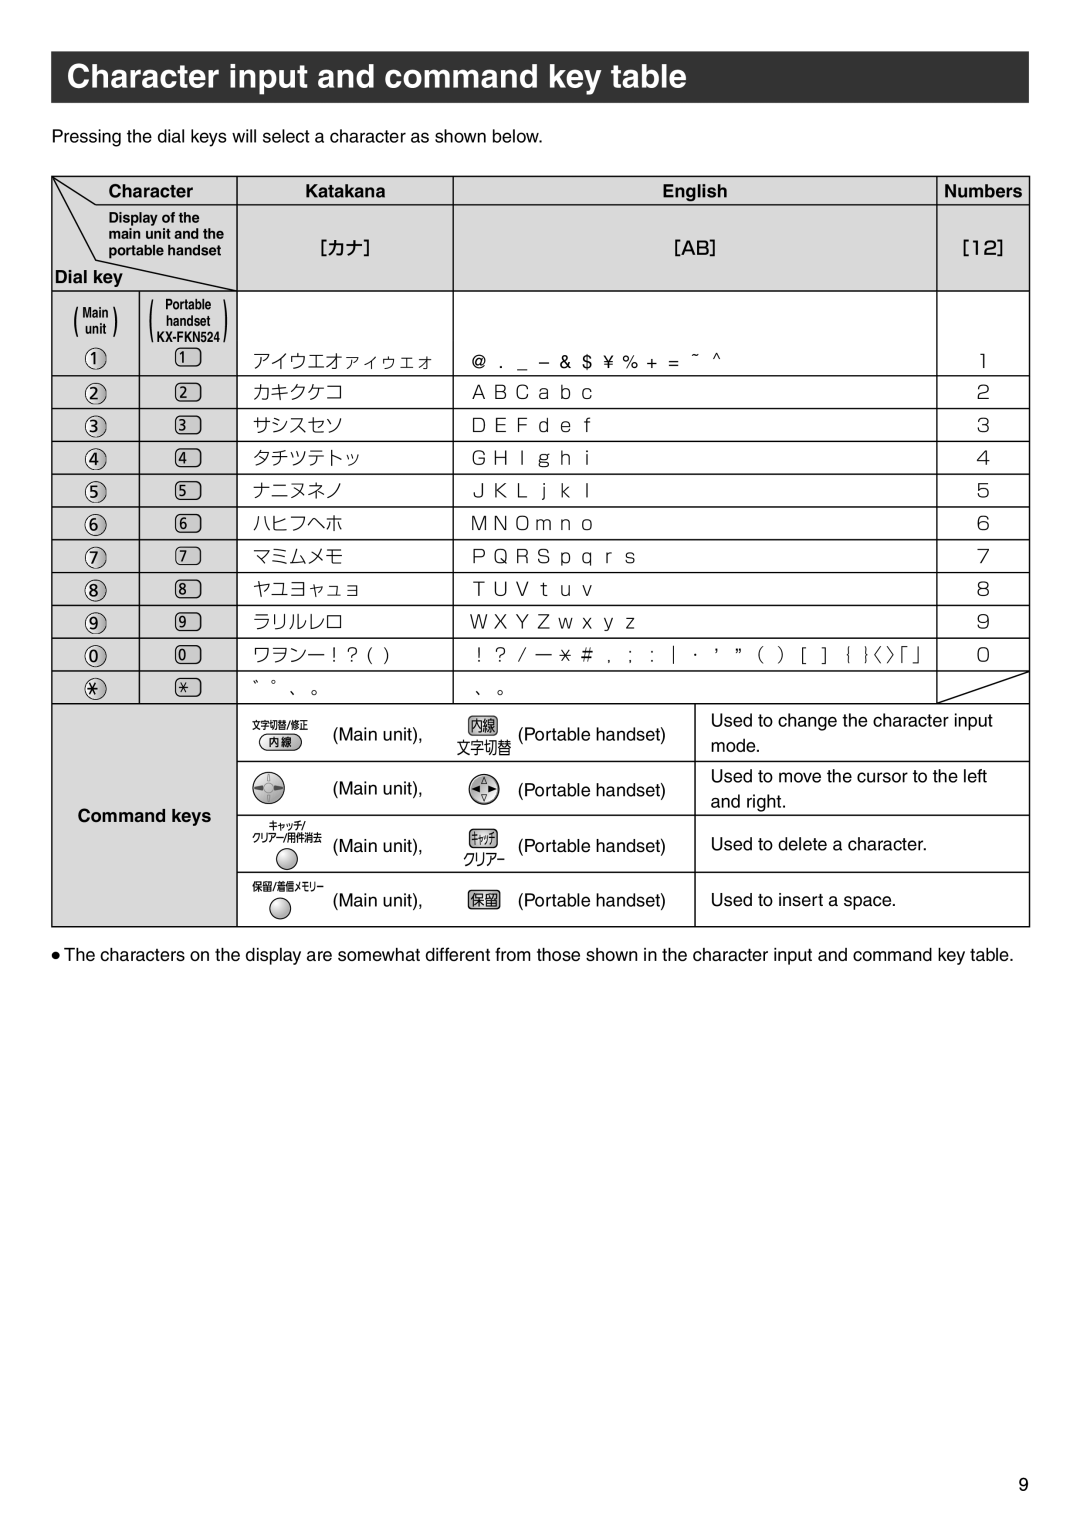 Panasonic KX-PW506DW, KX-PW506DL Character input and command key table, Katakana, English, Numbers, Dial key, Command keys 